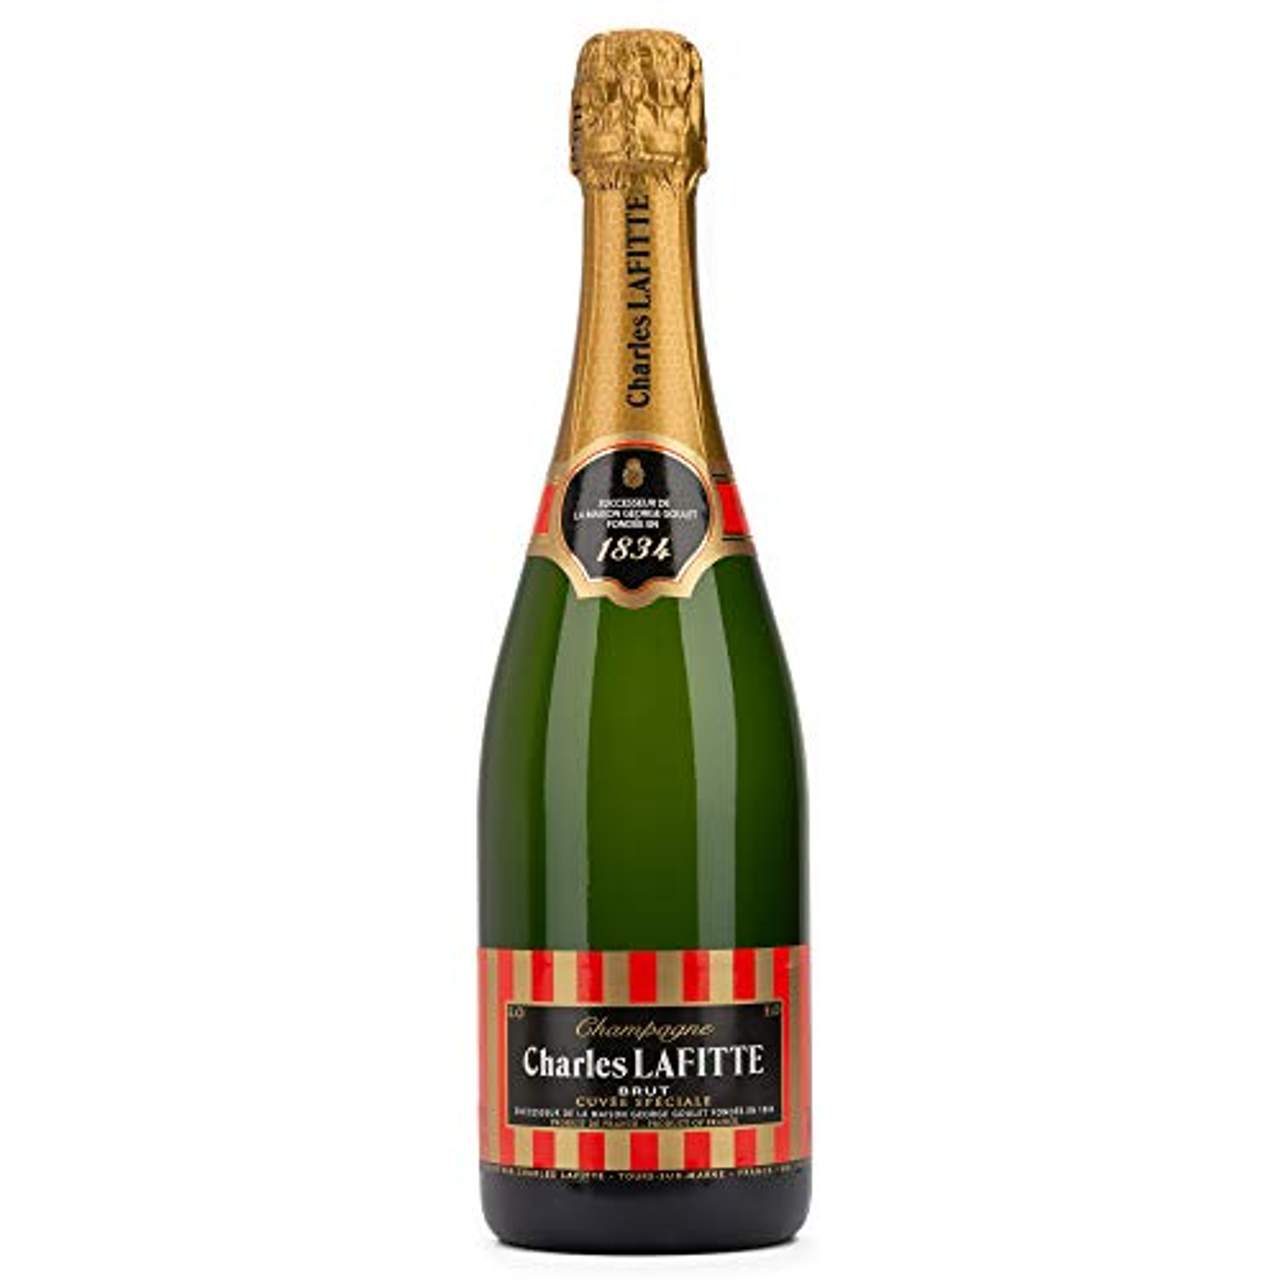 Champagne Charles Lafitte 1834 Brut